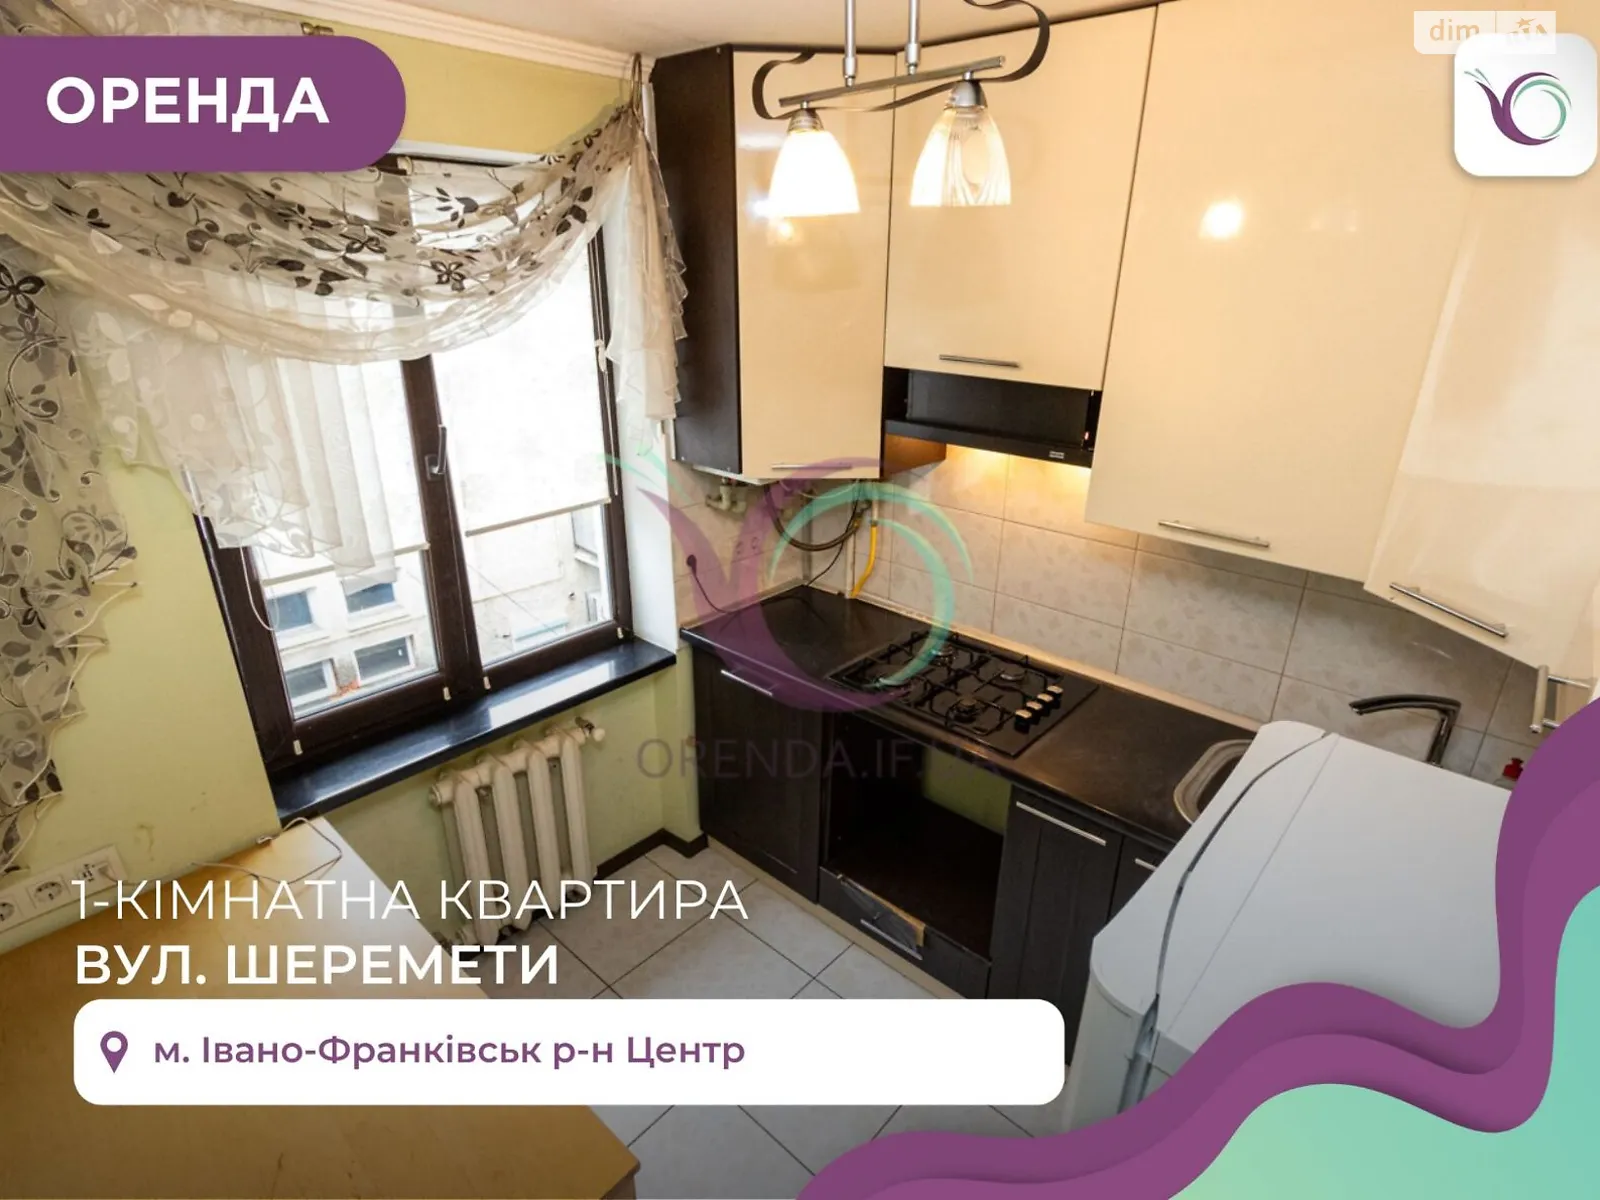 Сдается в аренду 1-комнатная квартира 28 кв. м в Ивано-Франковске, ул. Шереметы - фото 1